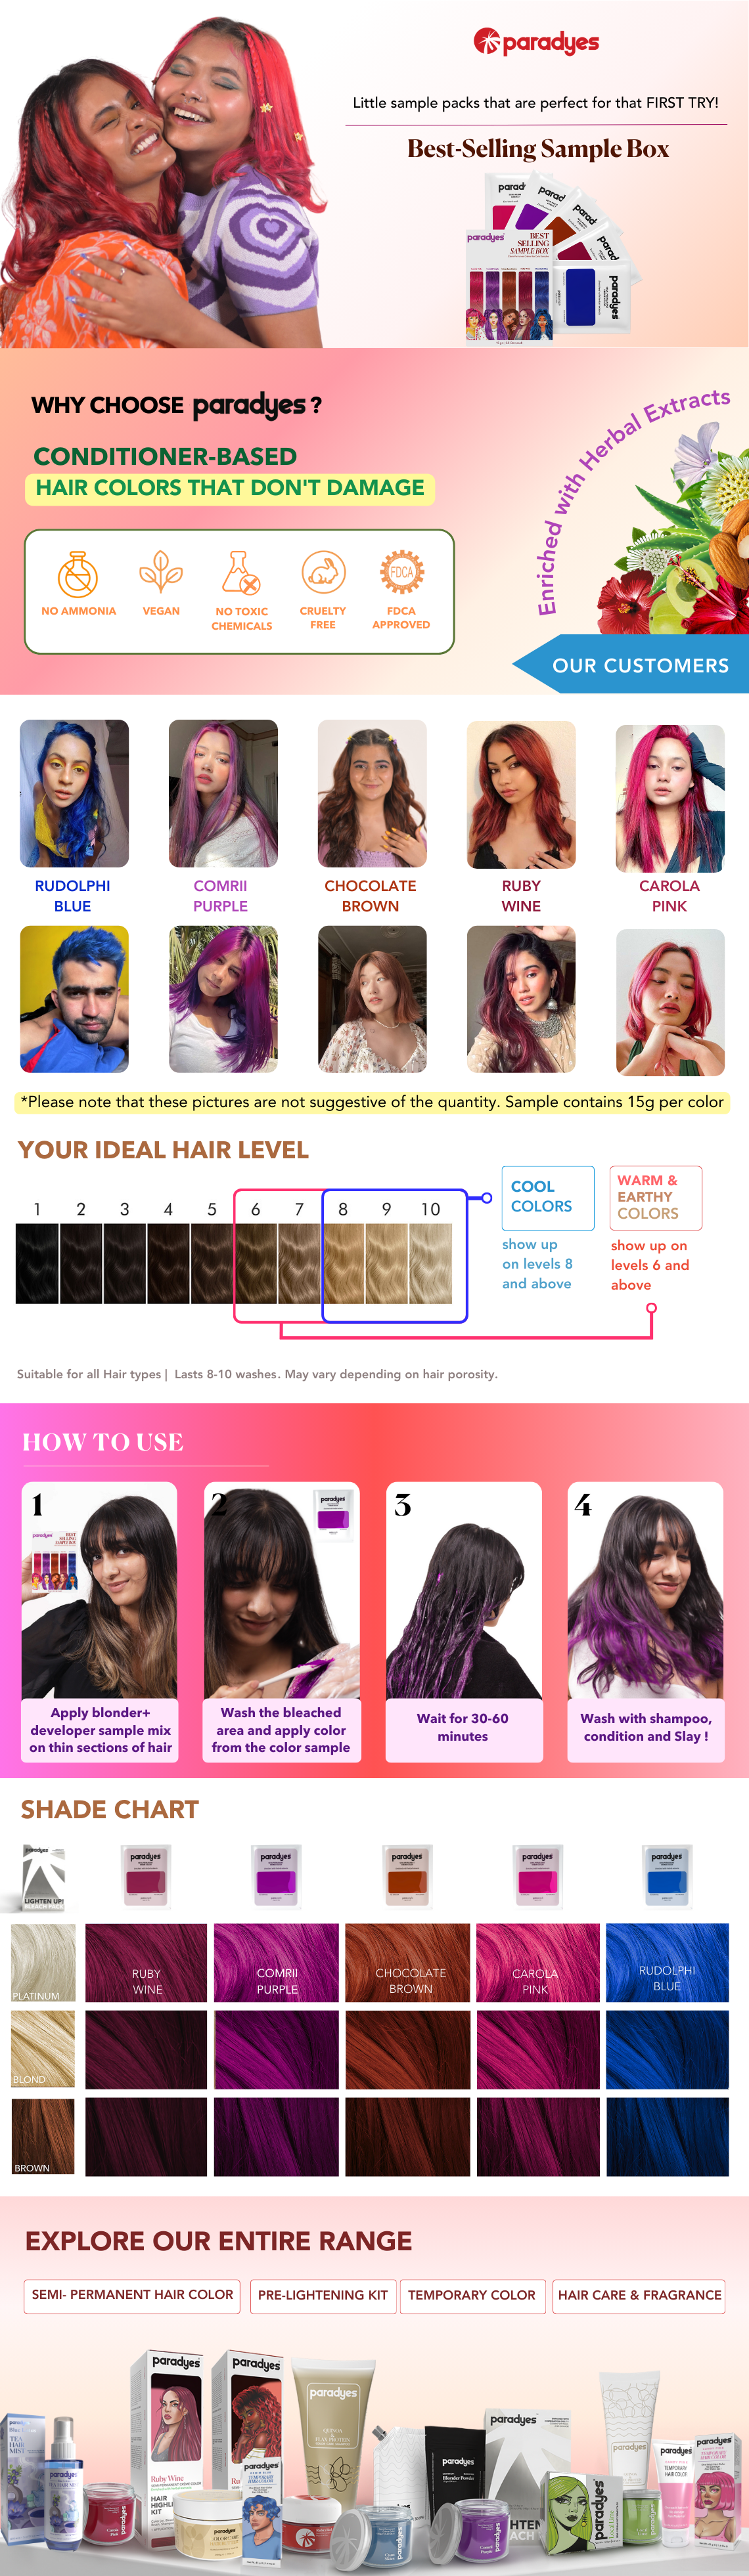 Lighten Up! Bleach Pack + Earthy Hair Color Sample Box